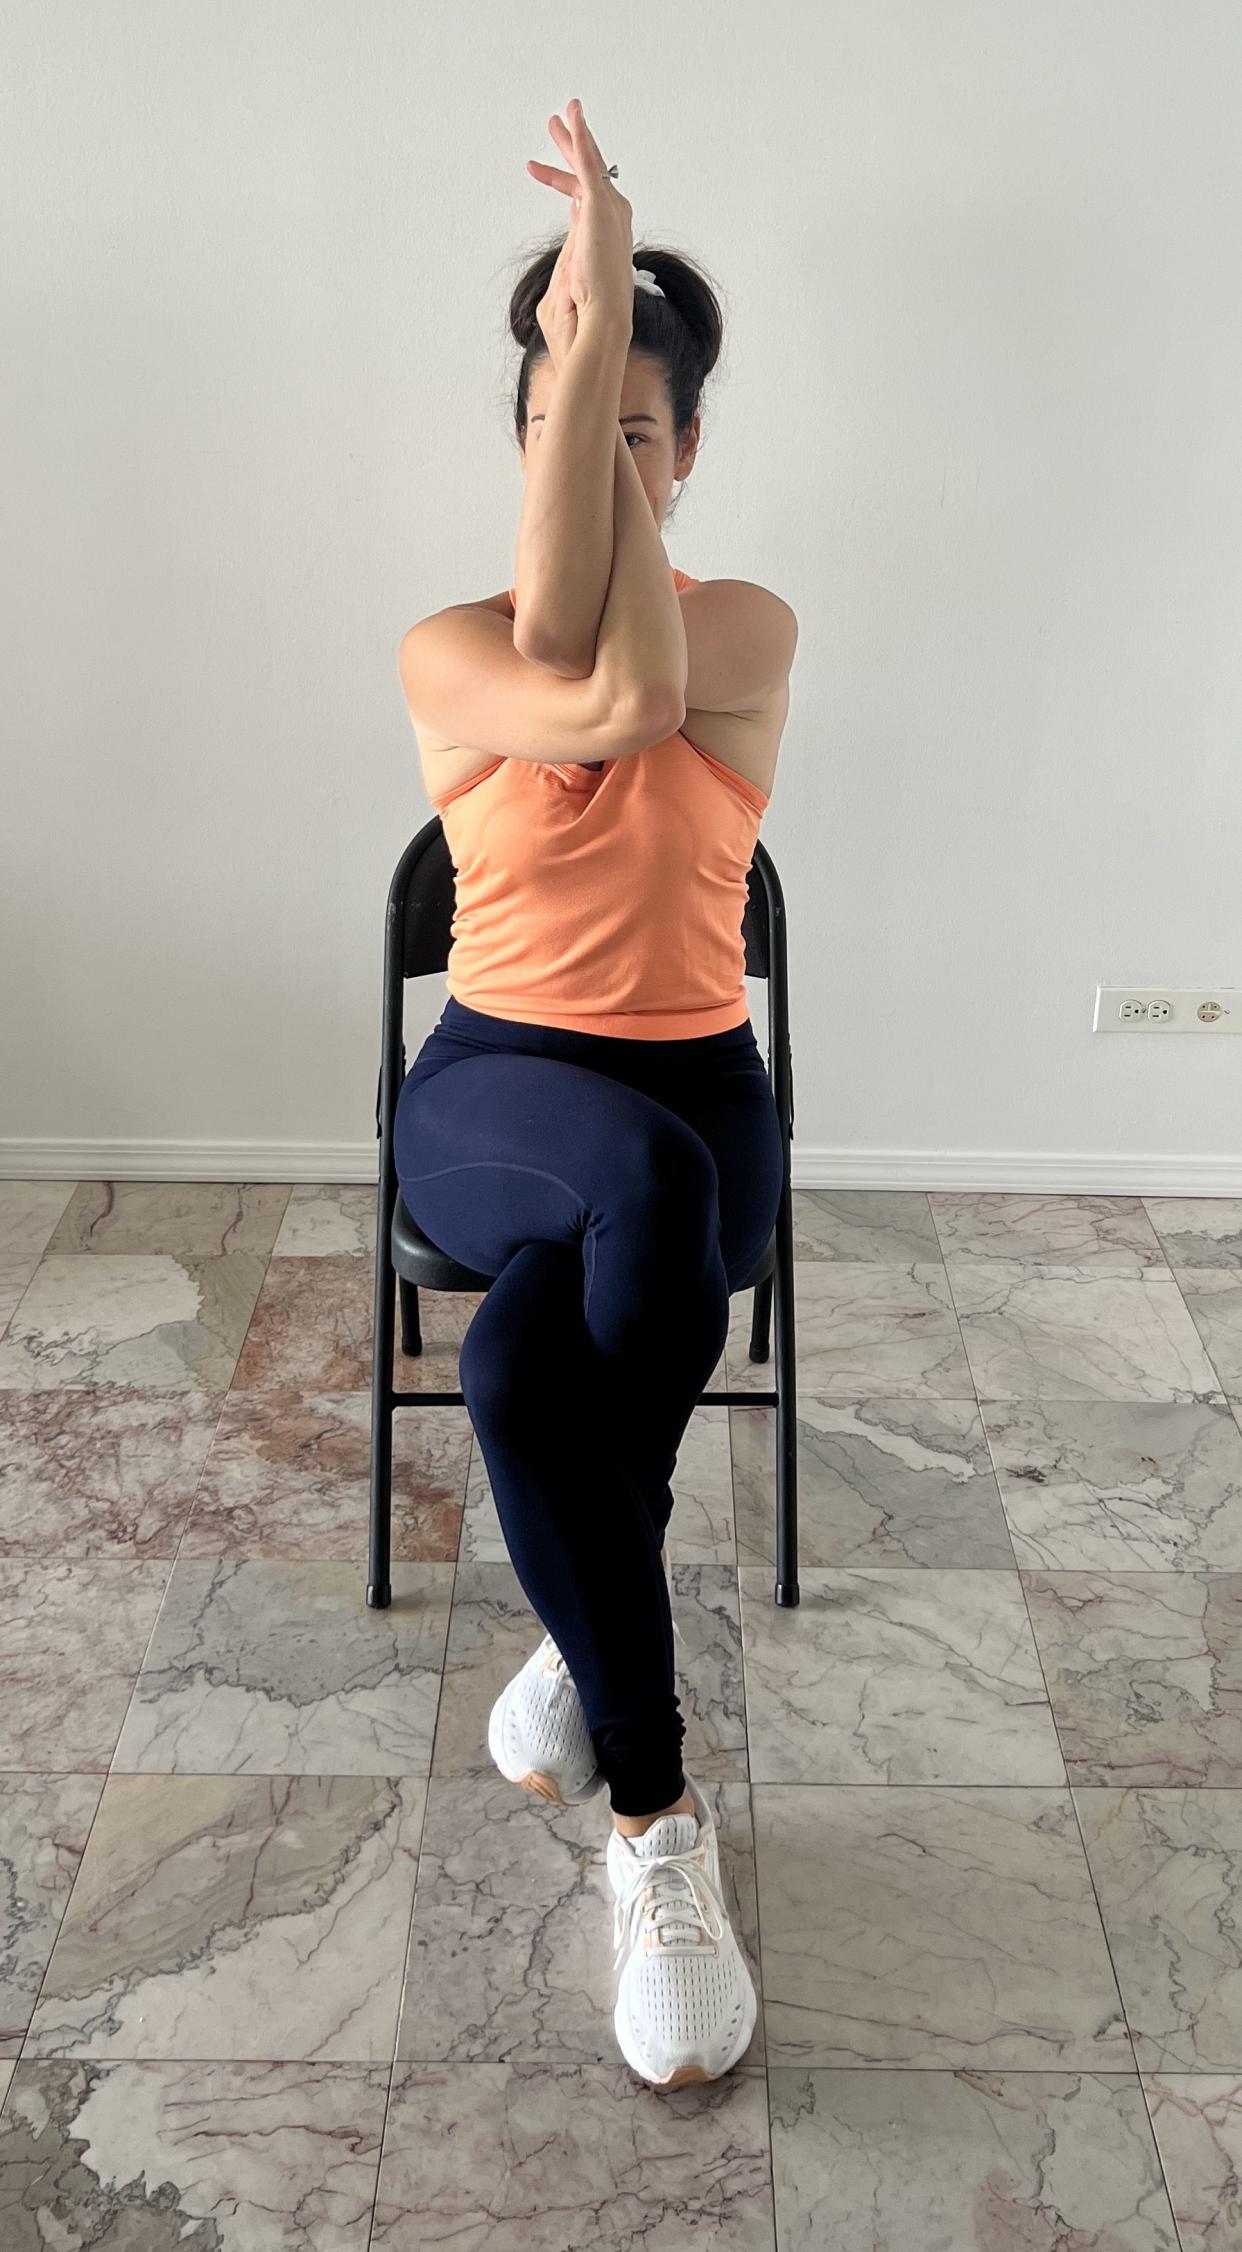 Eagle chair yoga pose